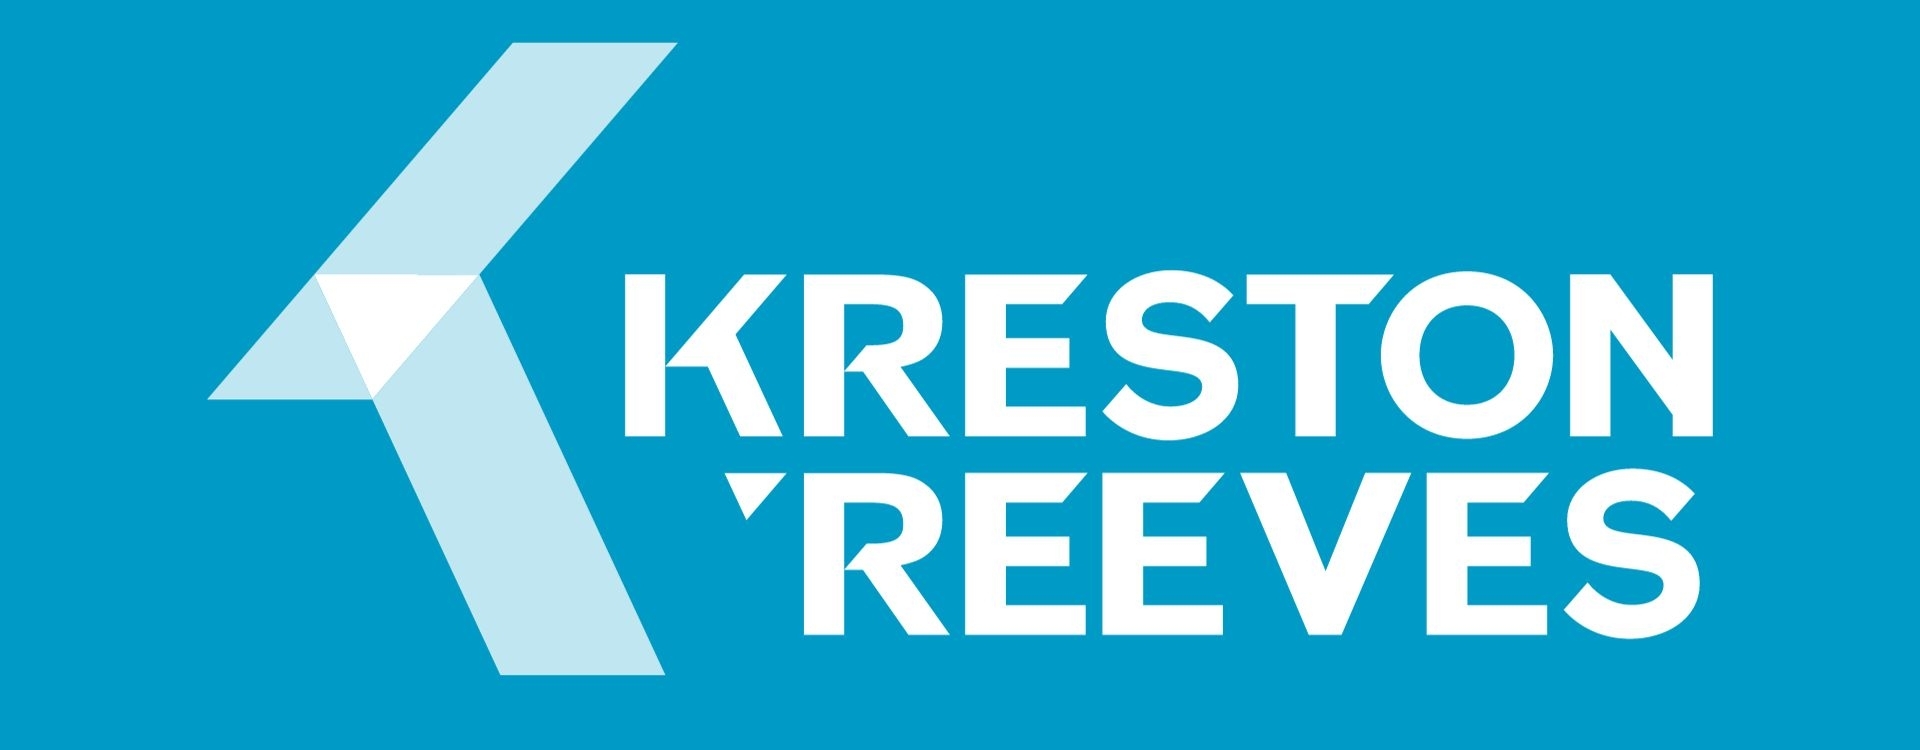 Academy schools sliding towards deficit, finds Kreston Reeves annual Academies benchmark